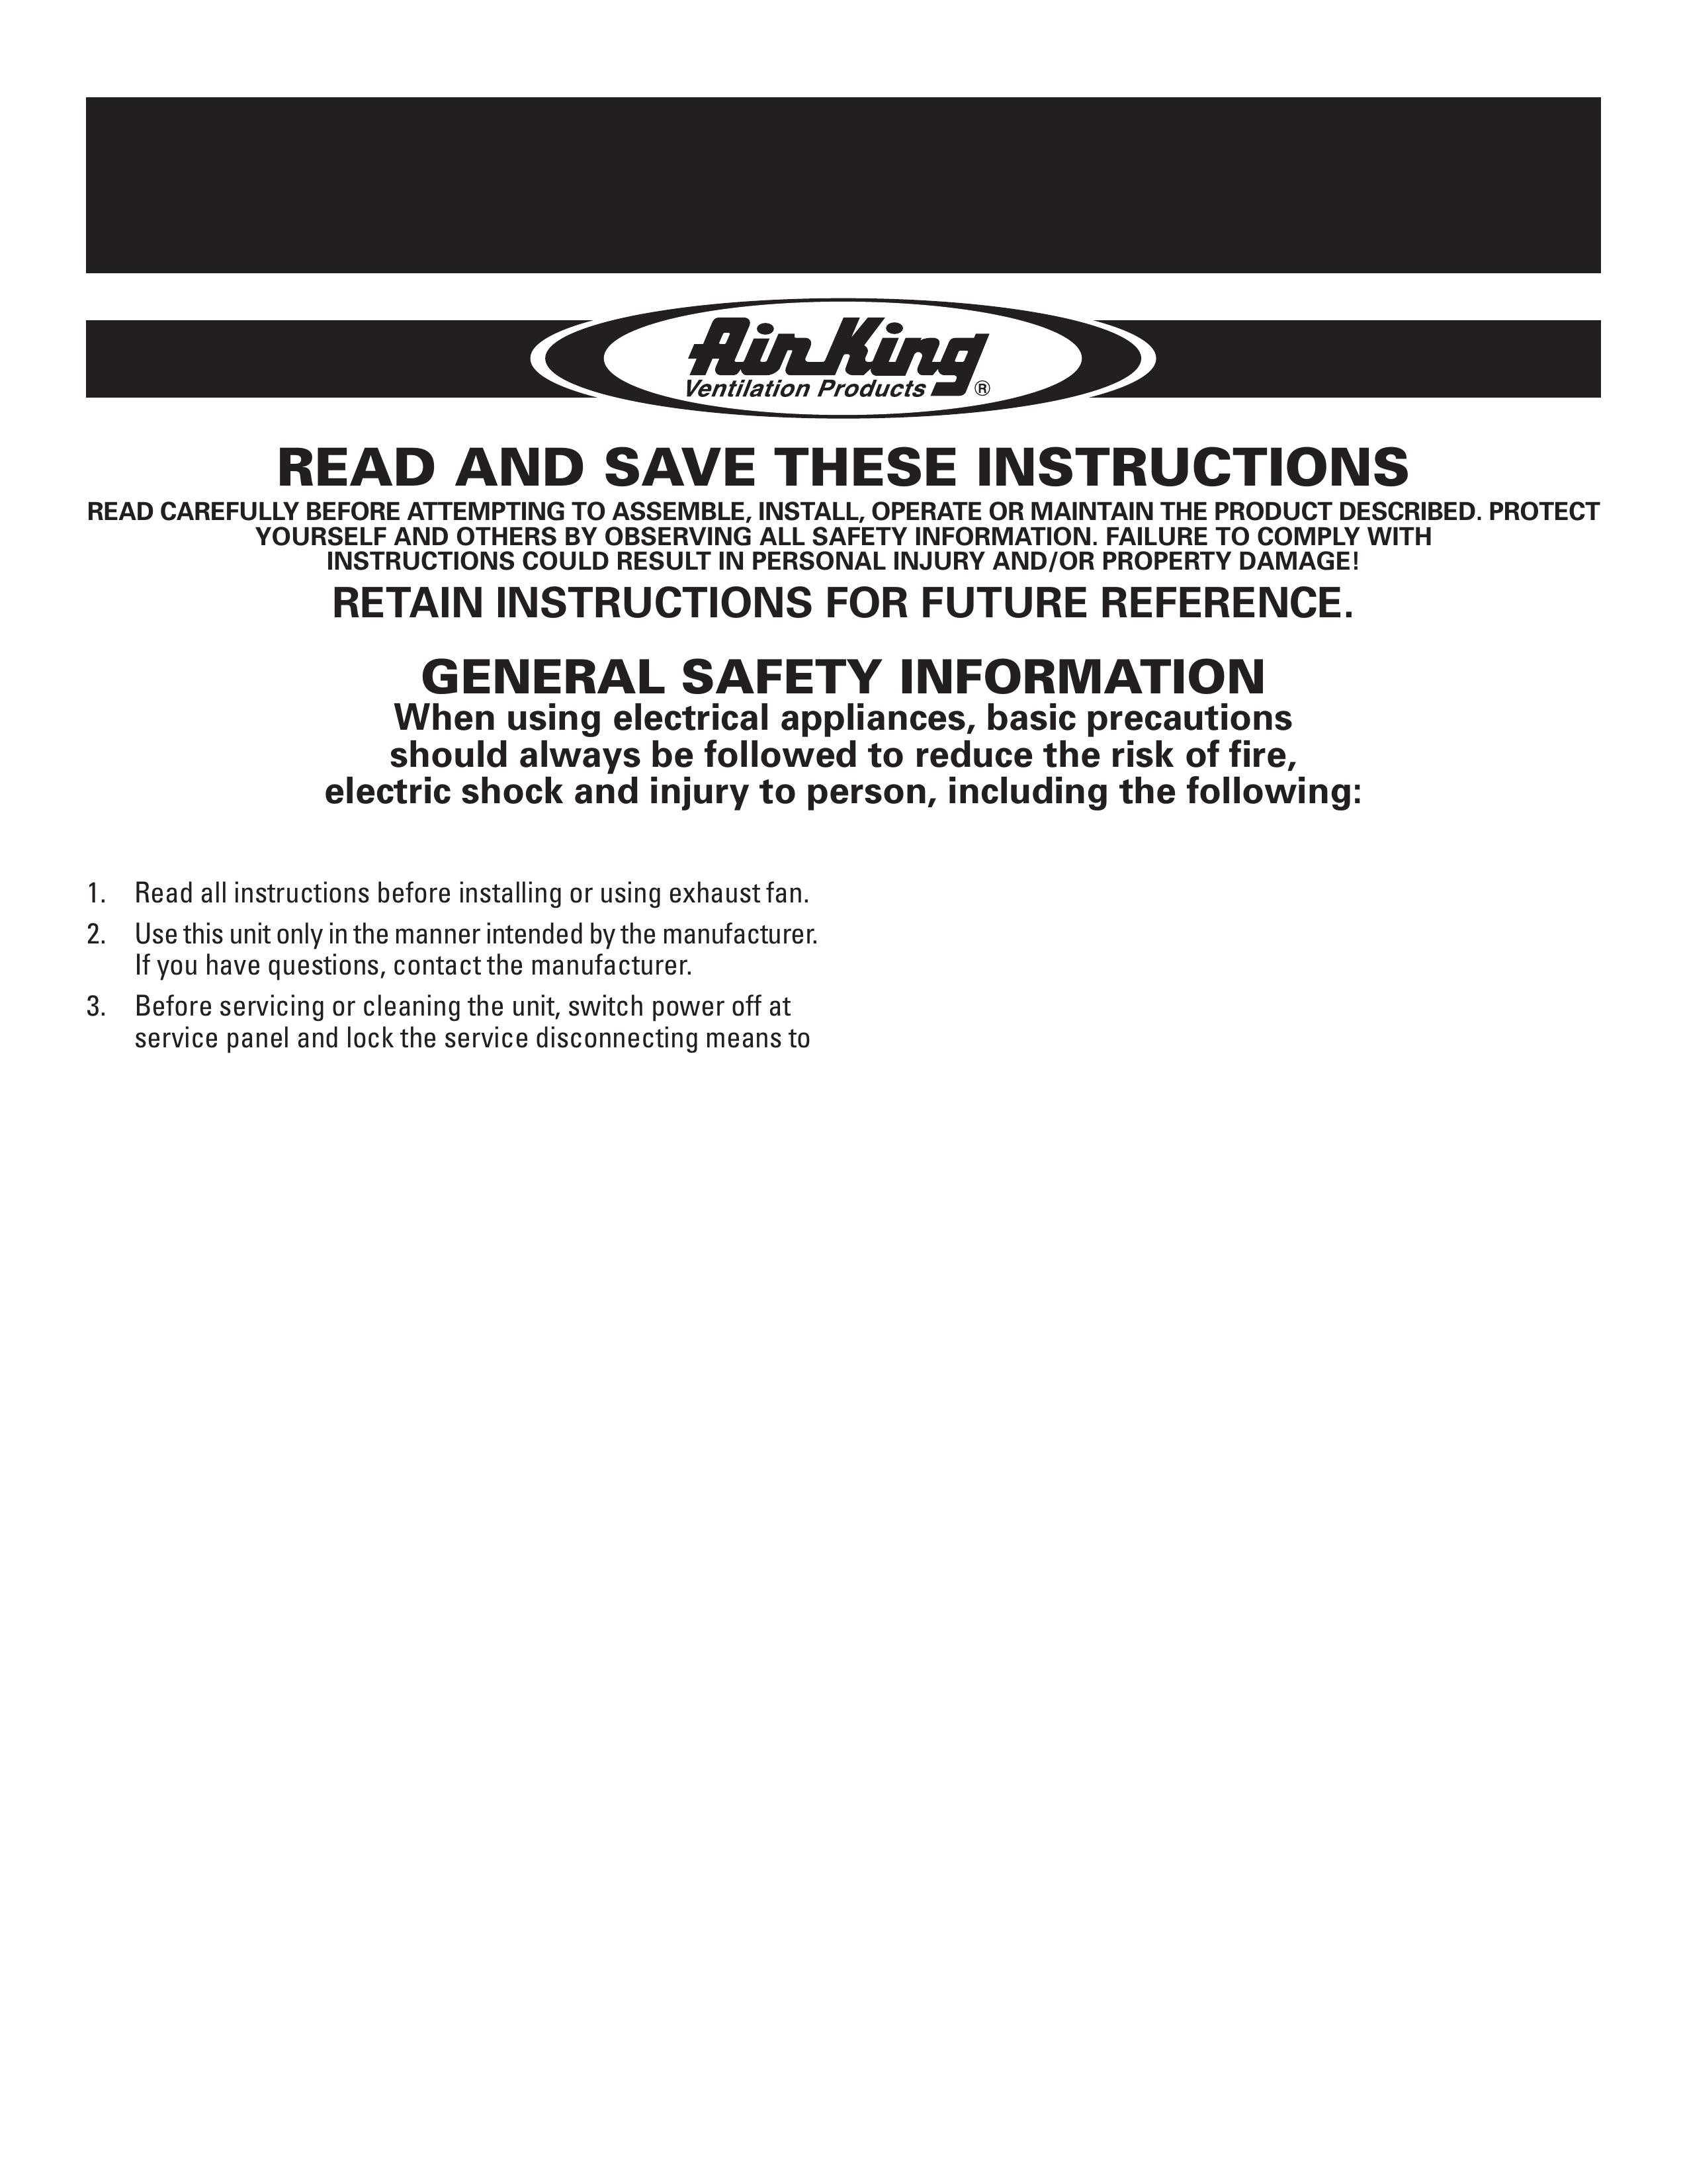 Air King AK80 Blower User Manual